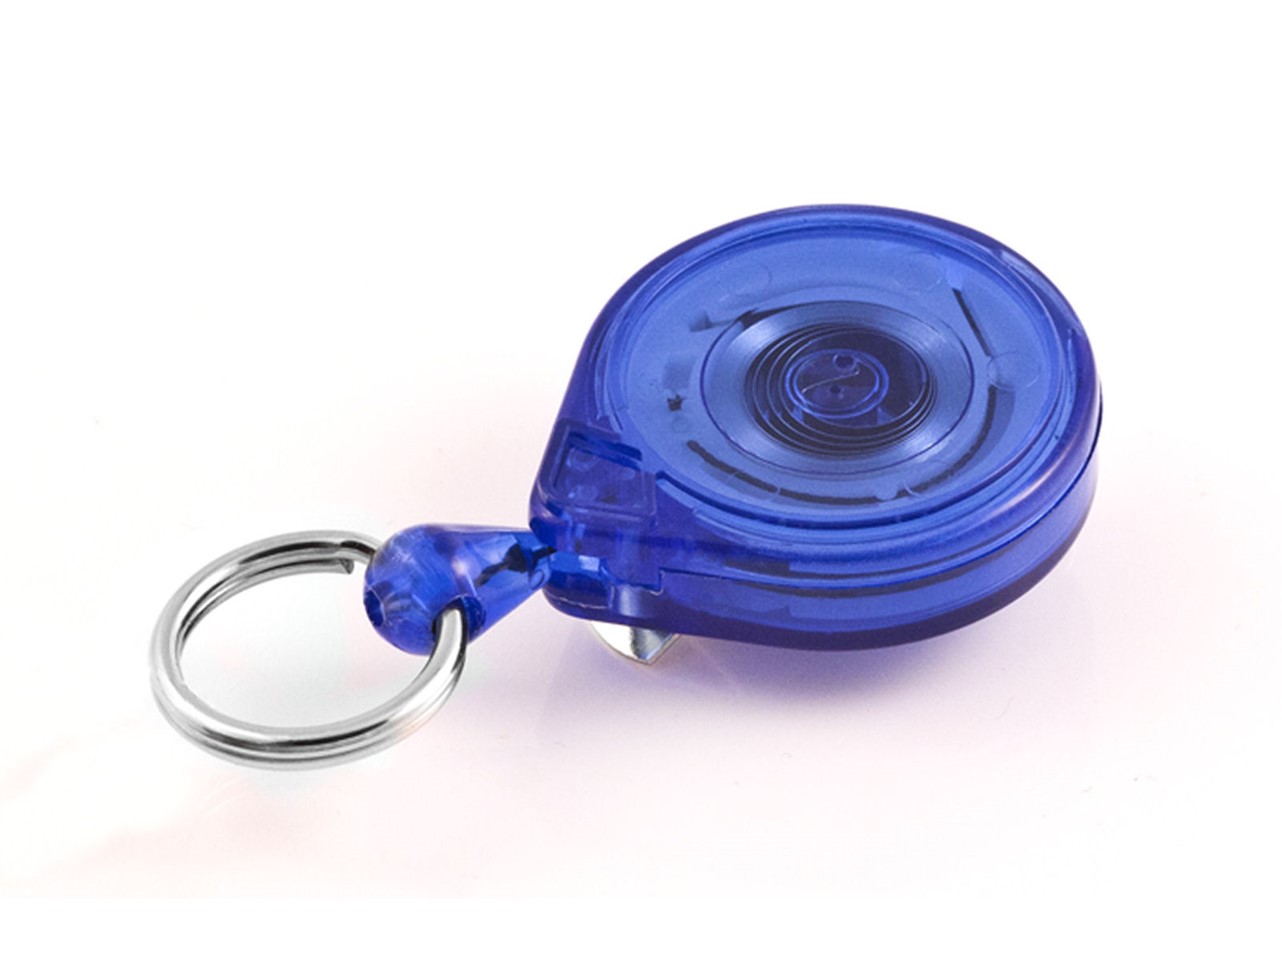 Bild von KEY-BAK Mini-Bak Blau Schlüsselrolle